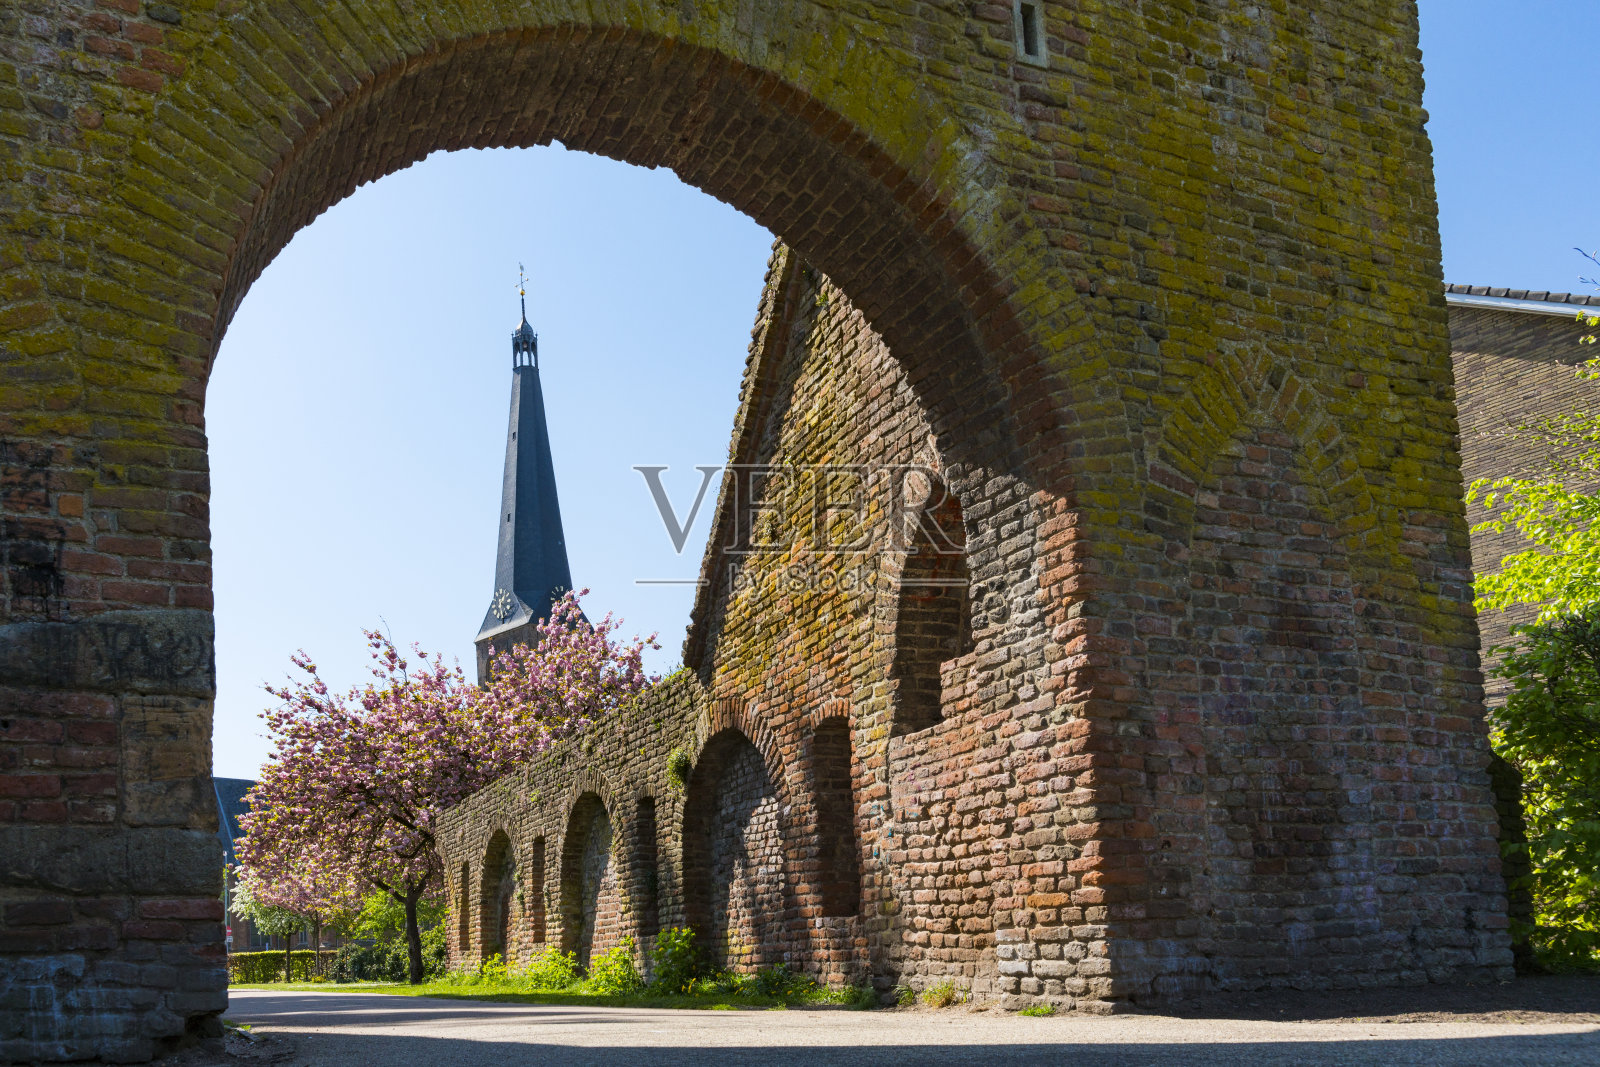 Niewstadsekerk, Johannes de Doper教堂，废墟，在荷兰Zutphen被称为spanjaardsport或spaese port的城门，照片摄影图片